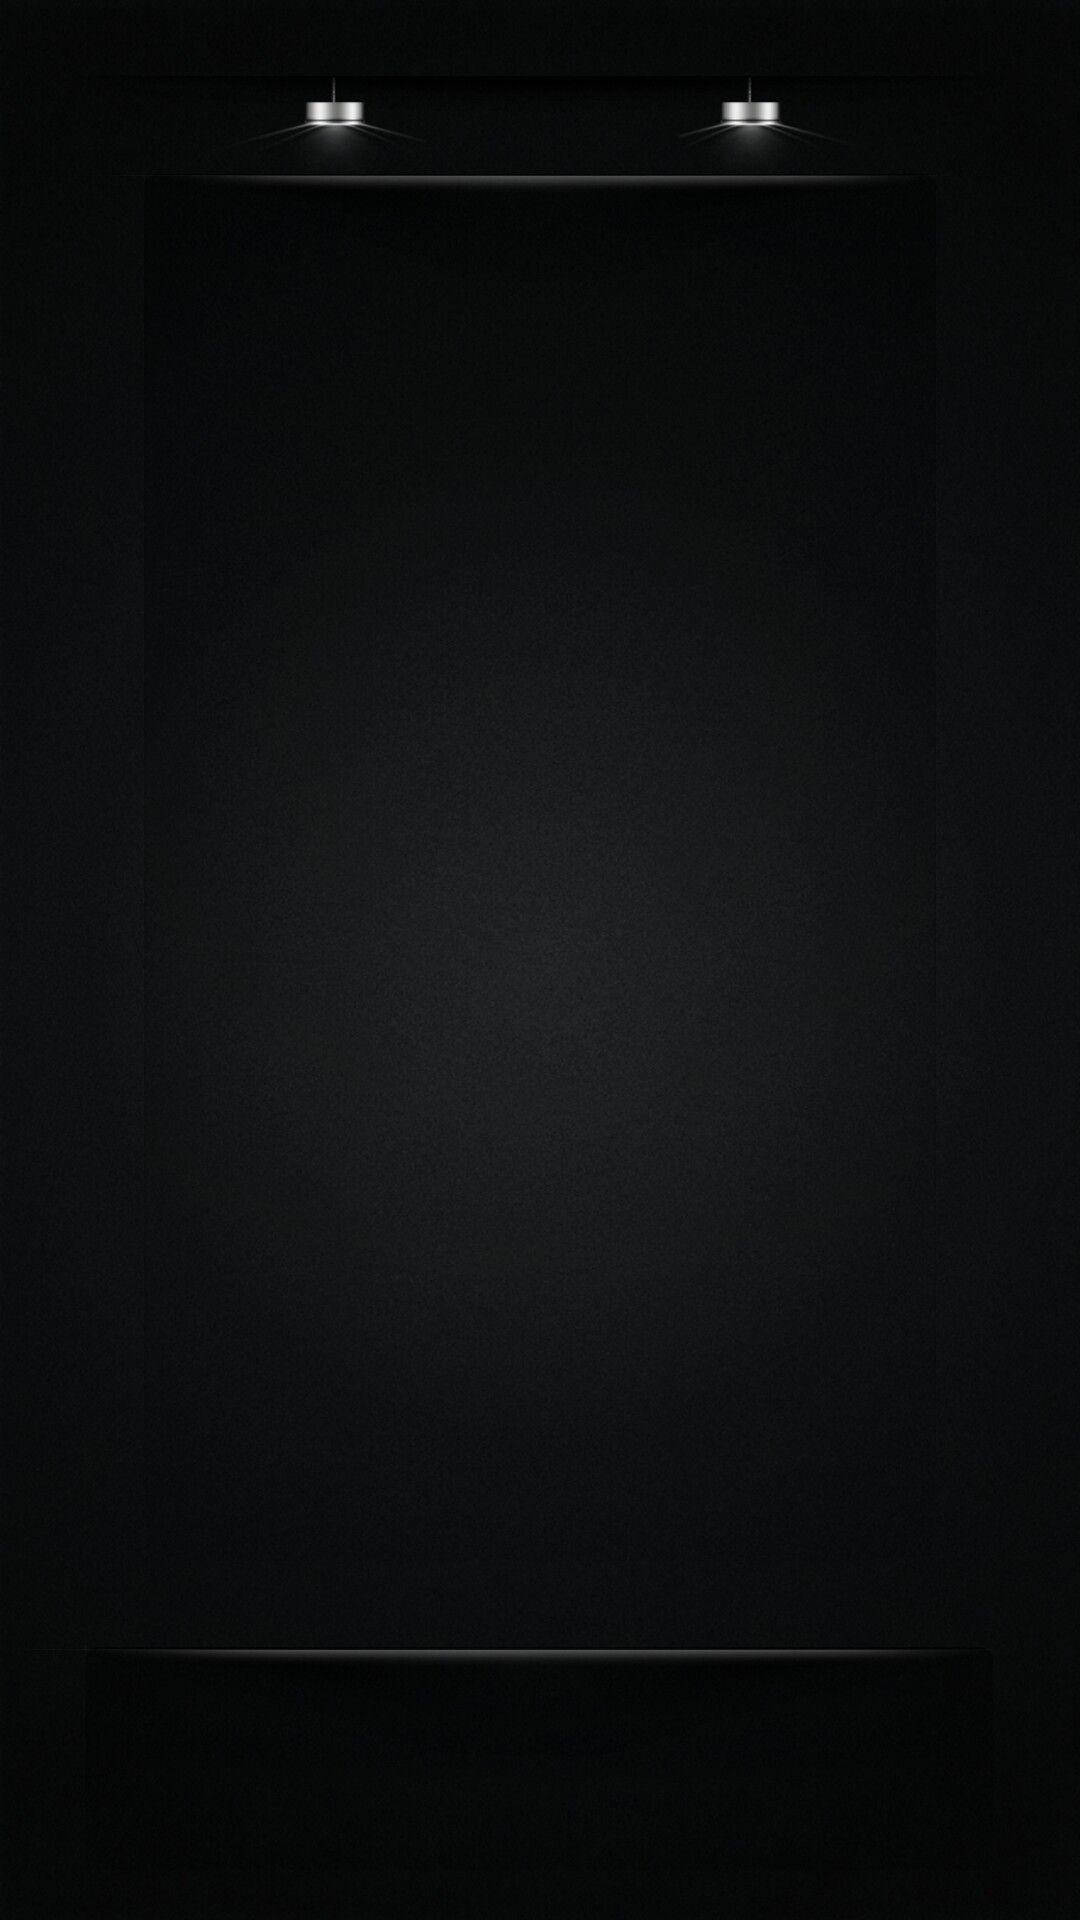 Dark Phone Canvas With Lights